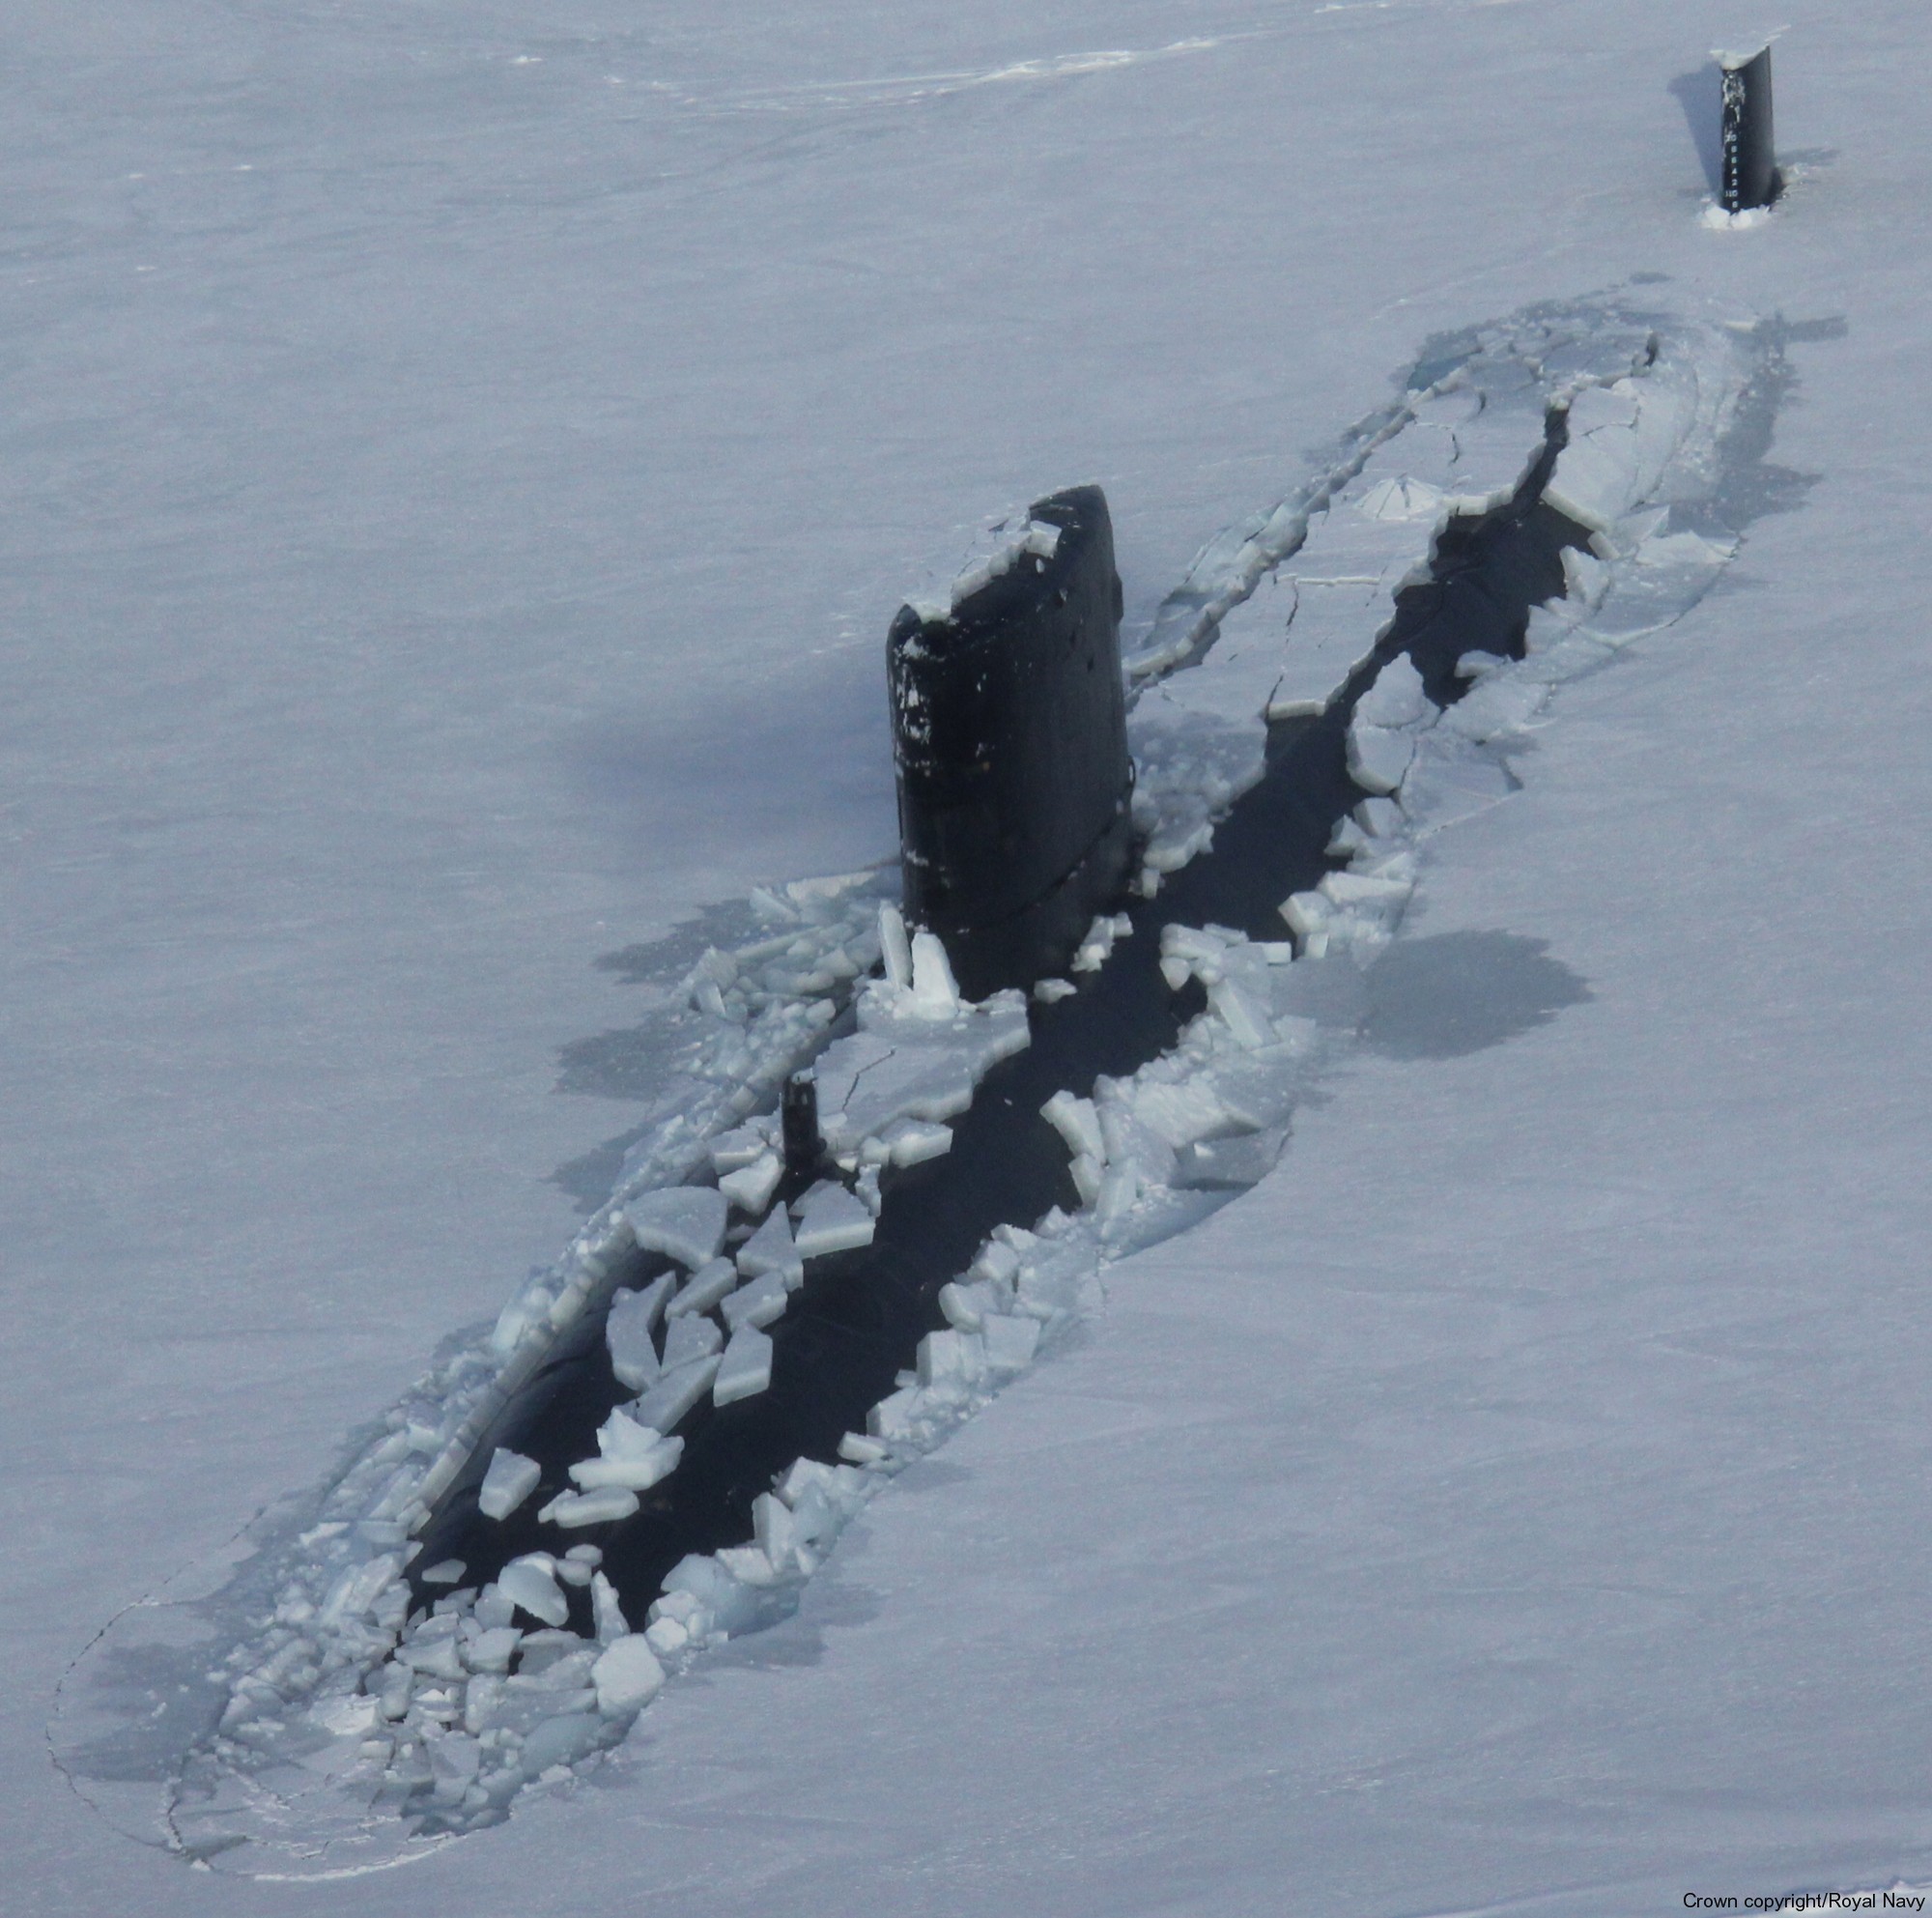 s91 hms trenchant trafalgar class attack submarine hunter killer royal navy 18